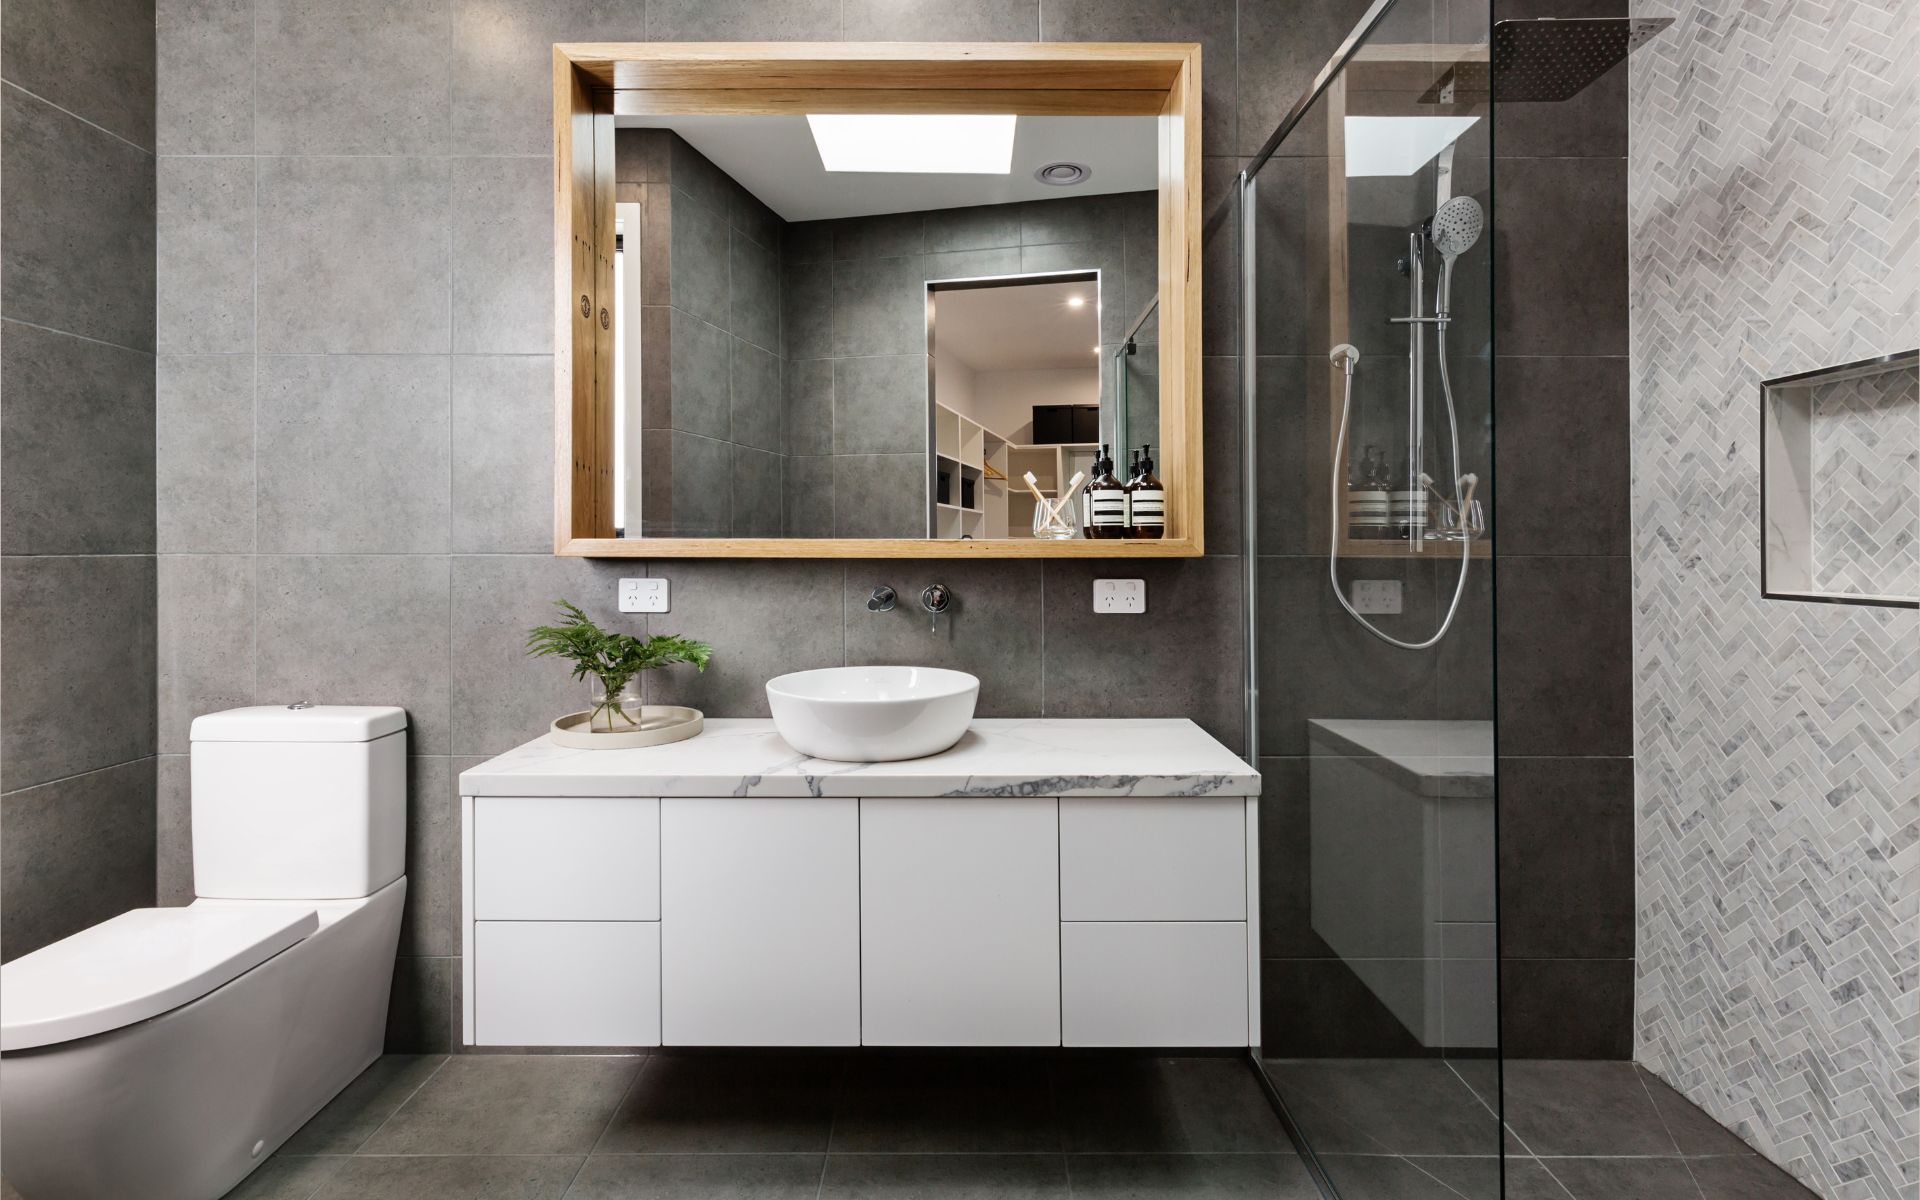 Modern bathroom with Bathroom vanity countertop options in white marble countertop